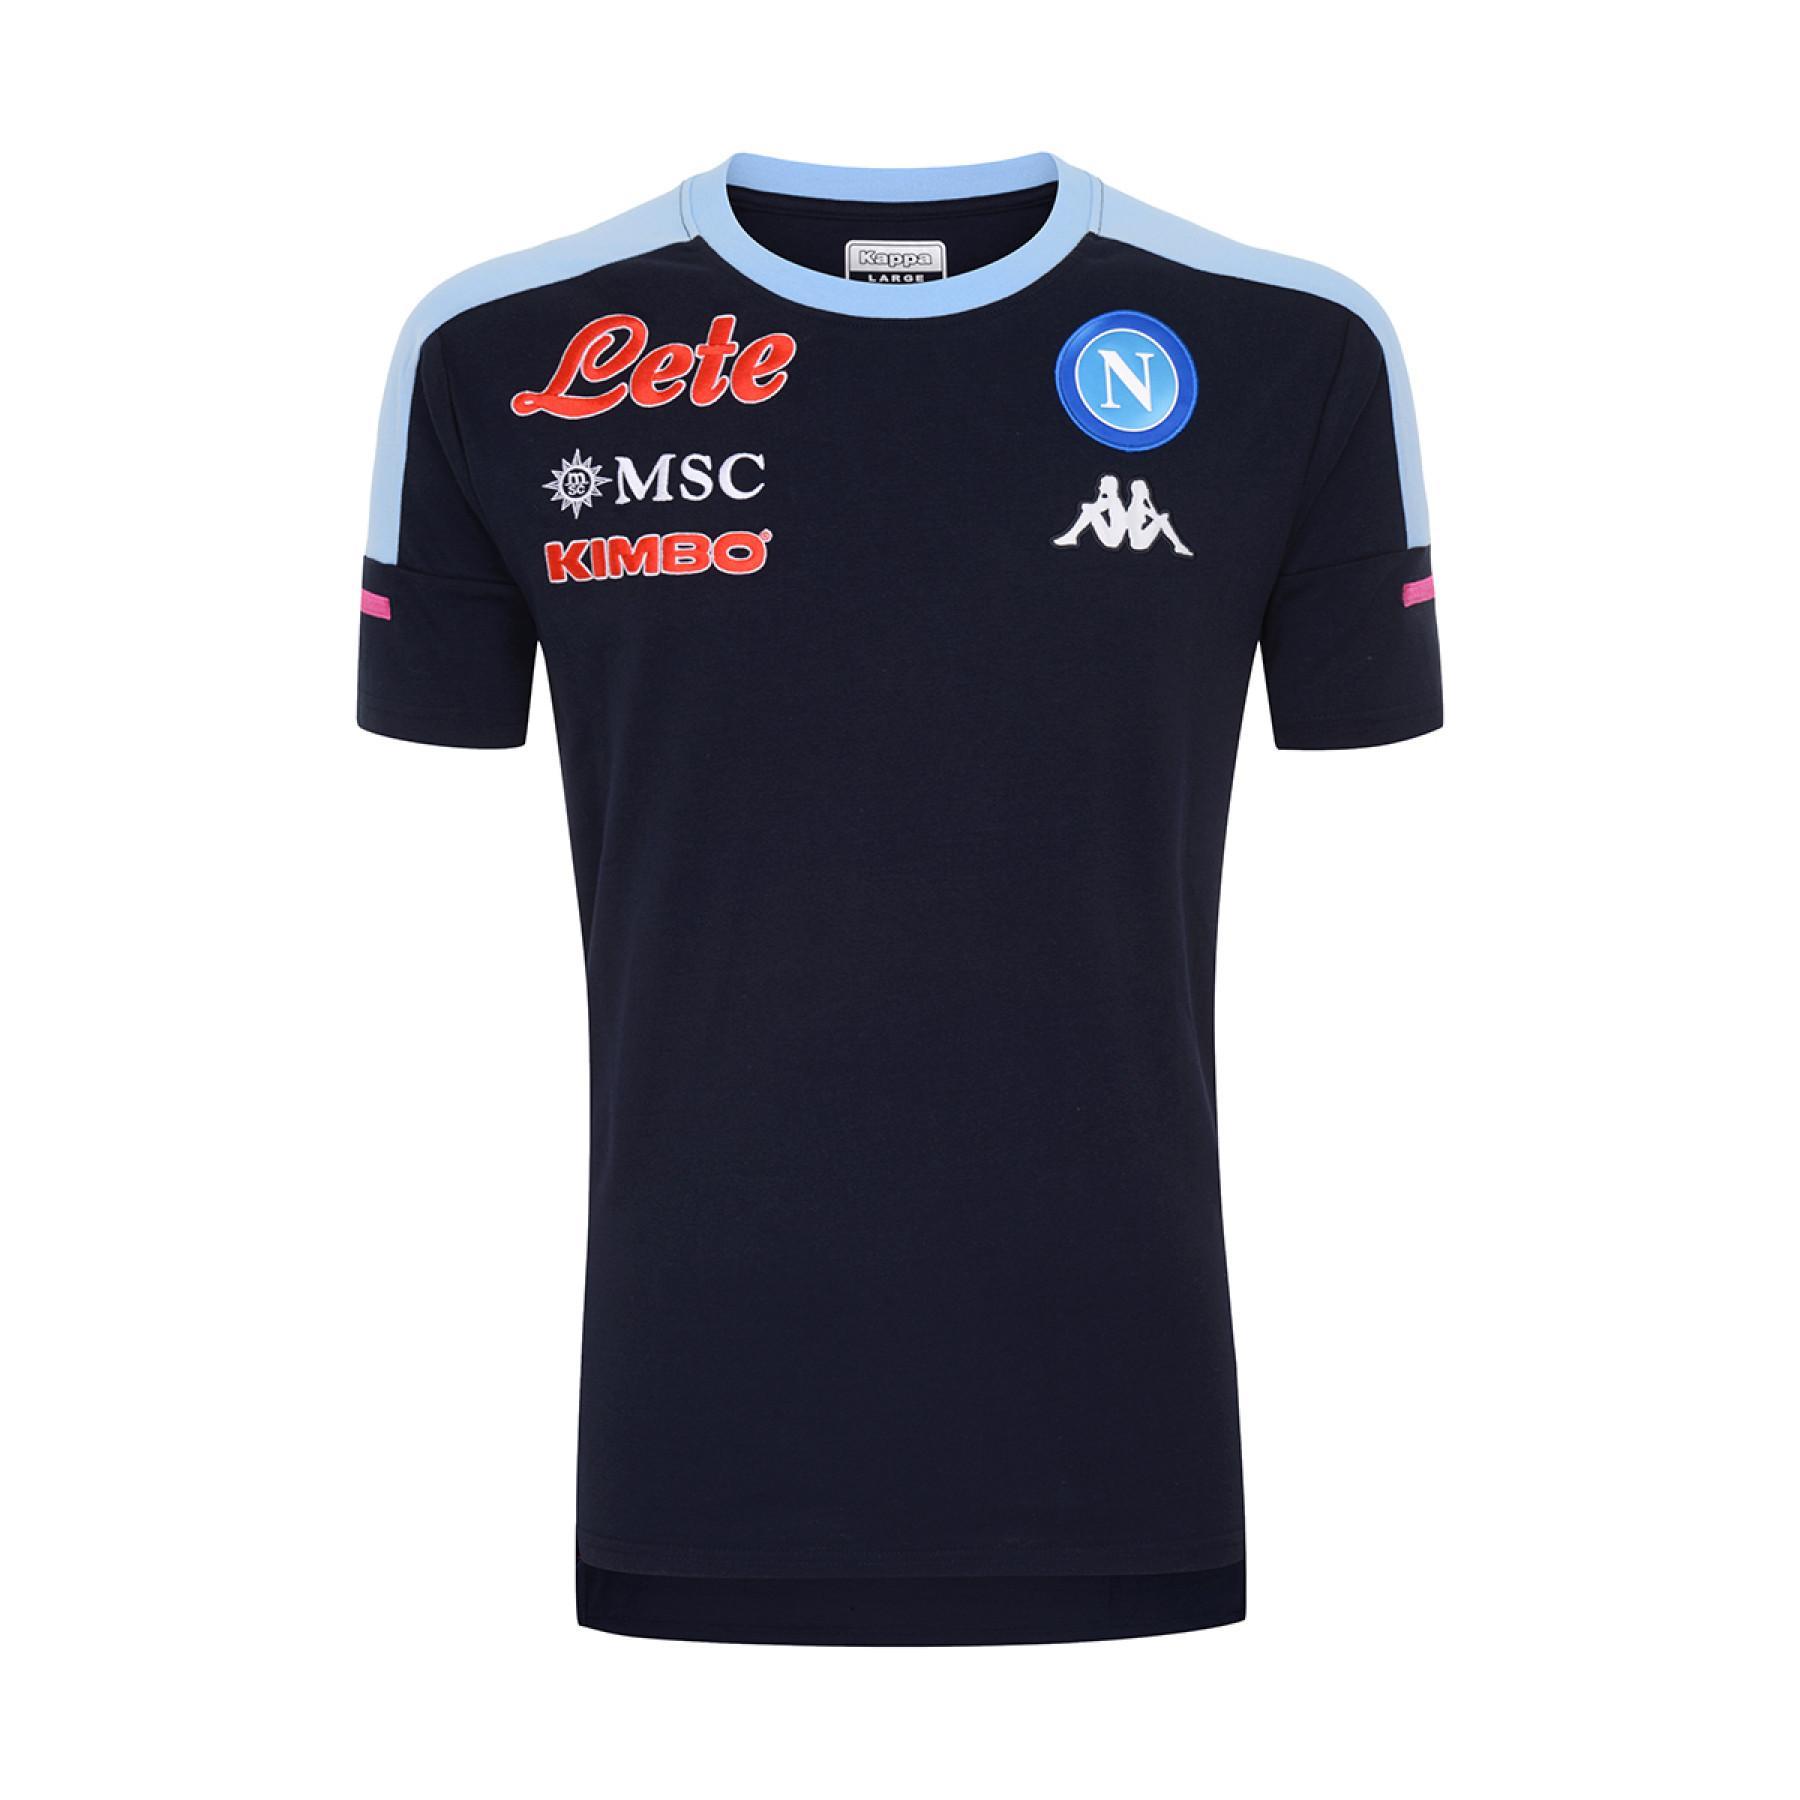 Child's T-shirt SSC Napoli 2020/21 ayba 4